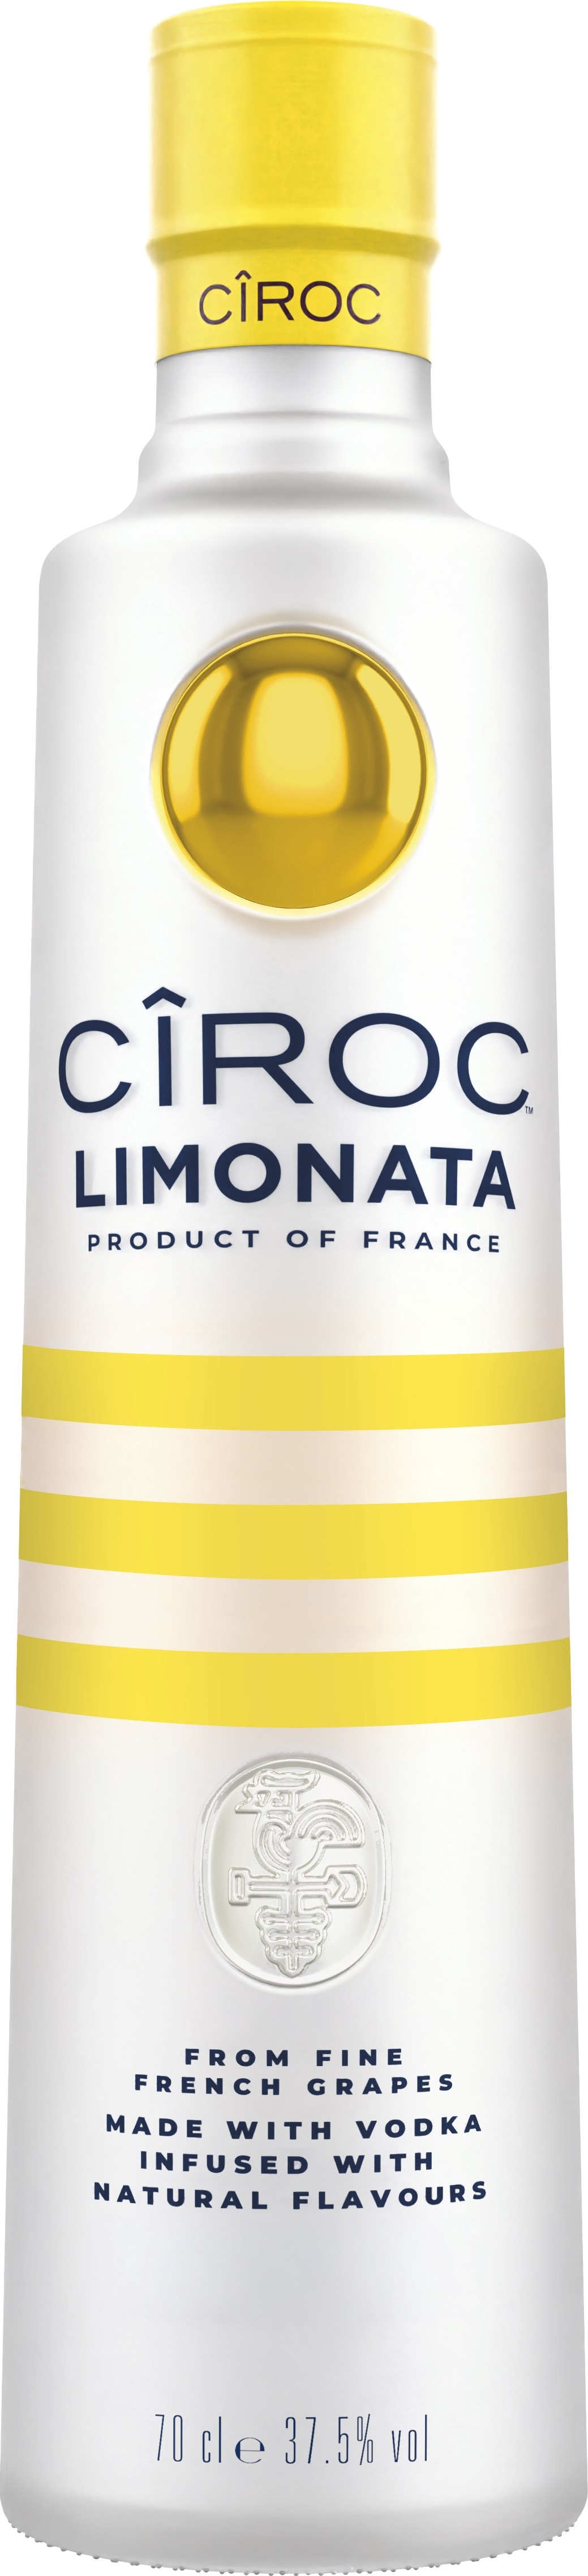 Drankdozijn Ciroc Limonata 70CL aanbieding